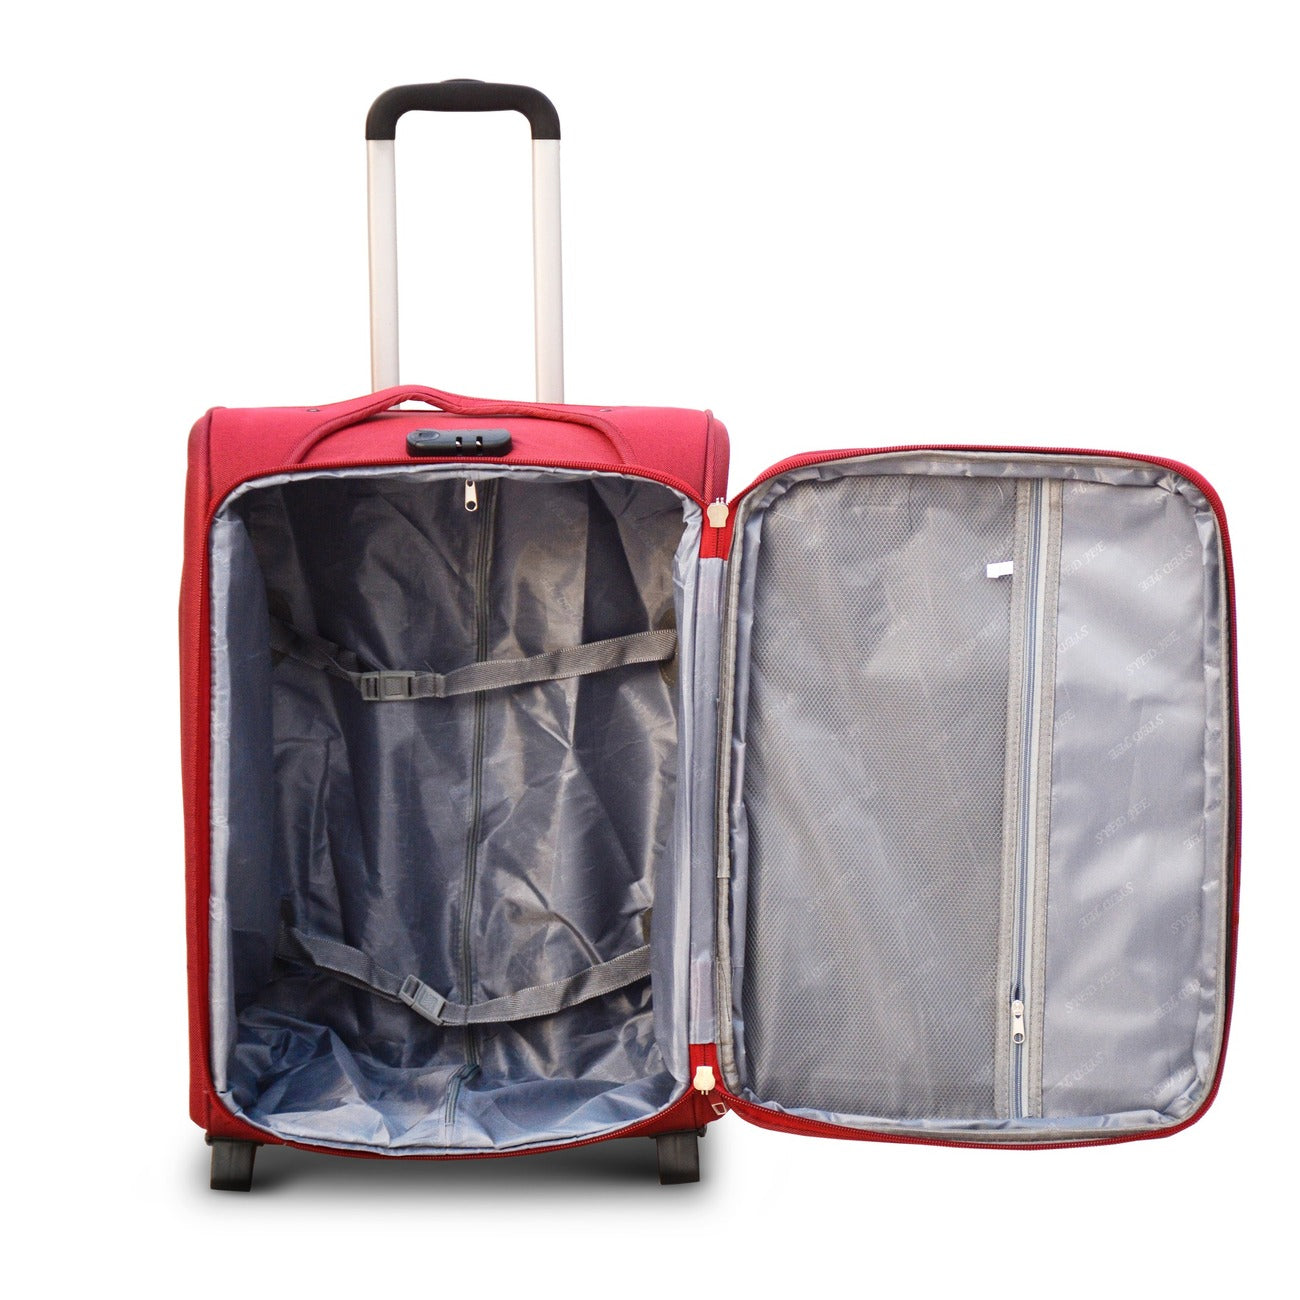 28" Red Colour SJ JIAN 2 Wheel Luggage Lightweight Soft Material Trolley Bag Zaappy.com